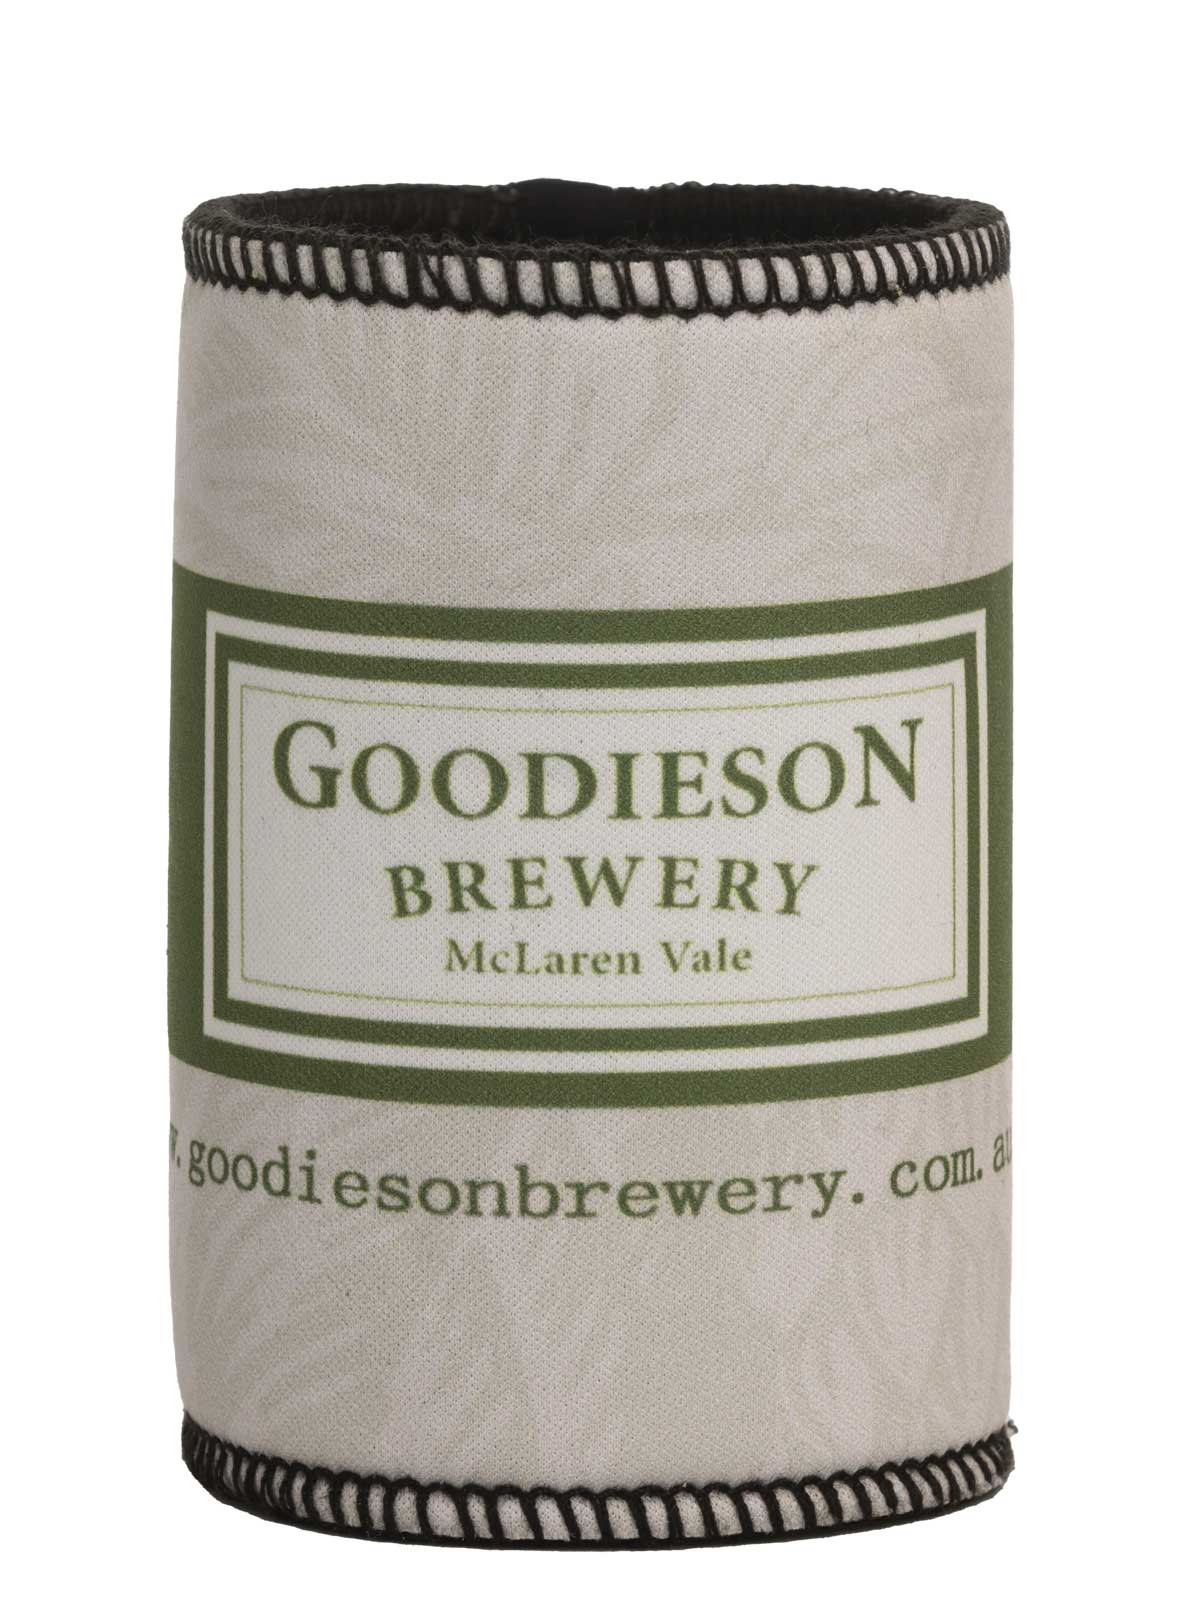 Goodieson Brewery